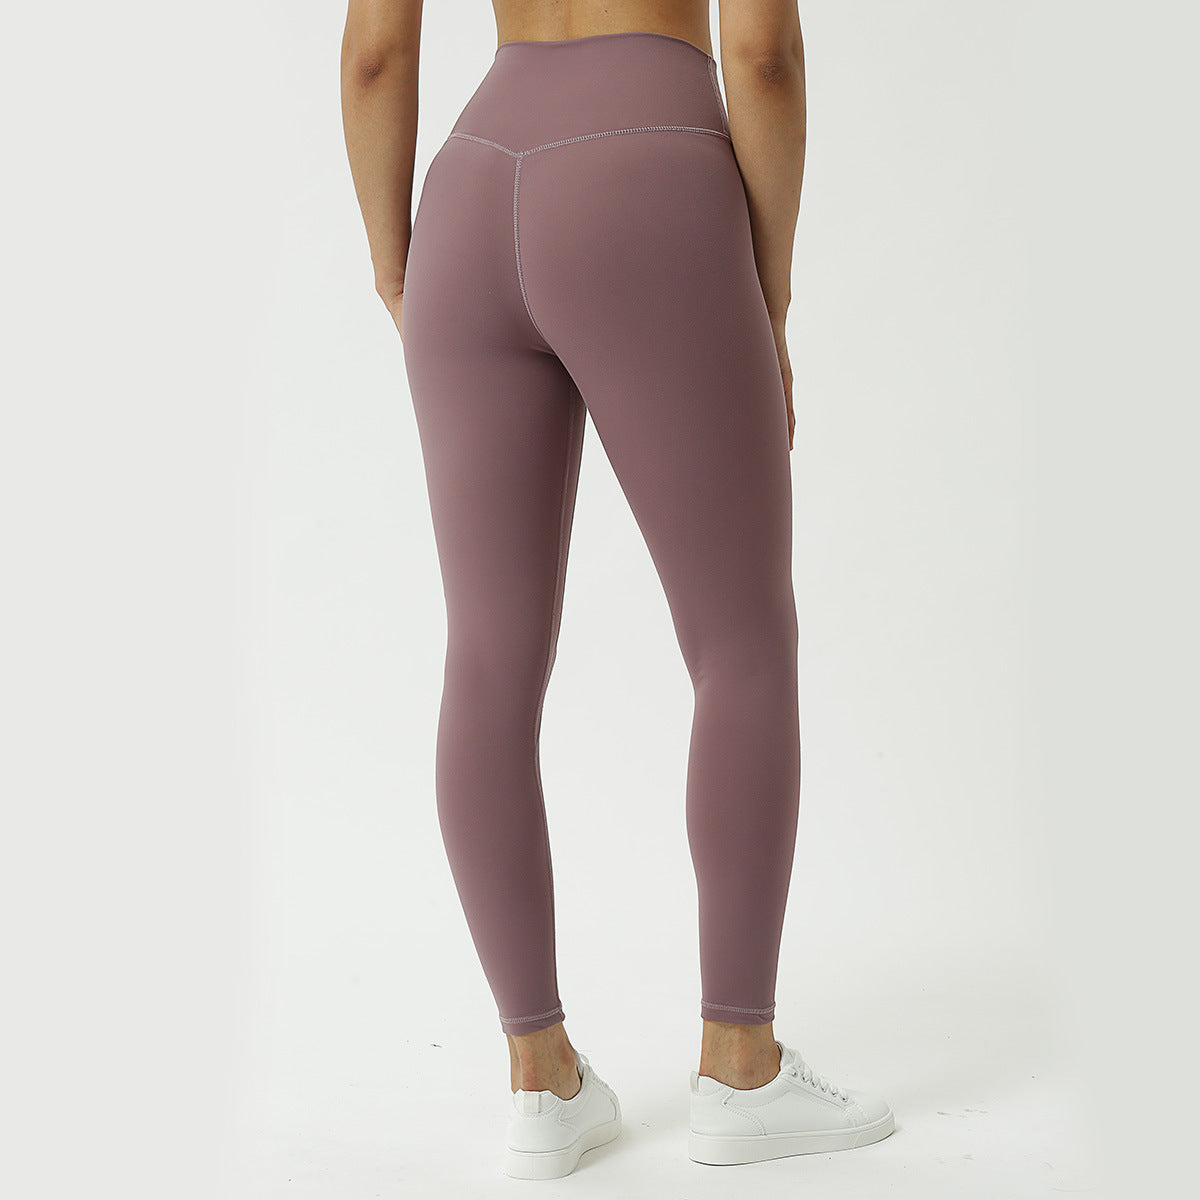 Hzori New Double-Sided Brushed Cloud Sense Yoga Pants Women's Sports Slim Fit Fitness Pants High Waist Nude Feel Yoga Ninth Pants